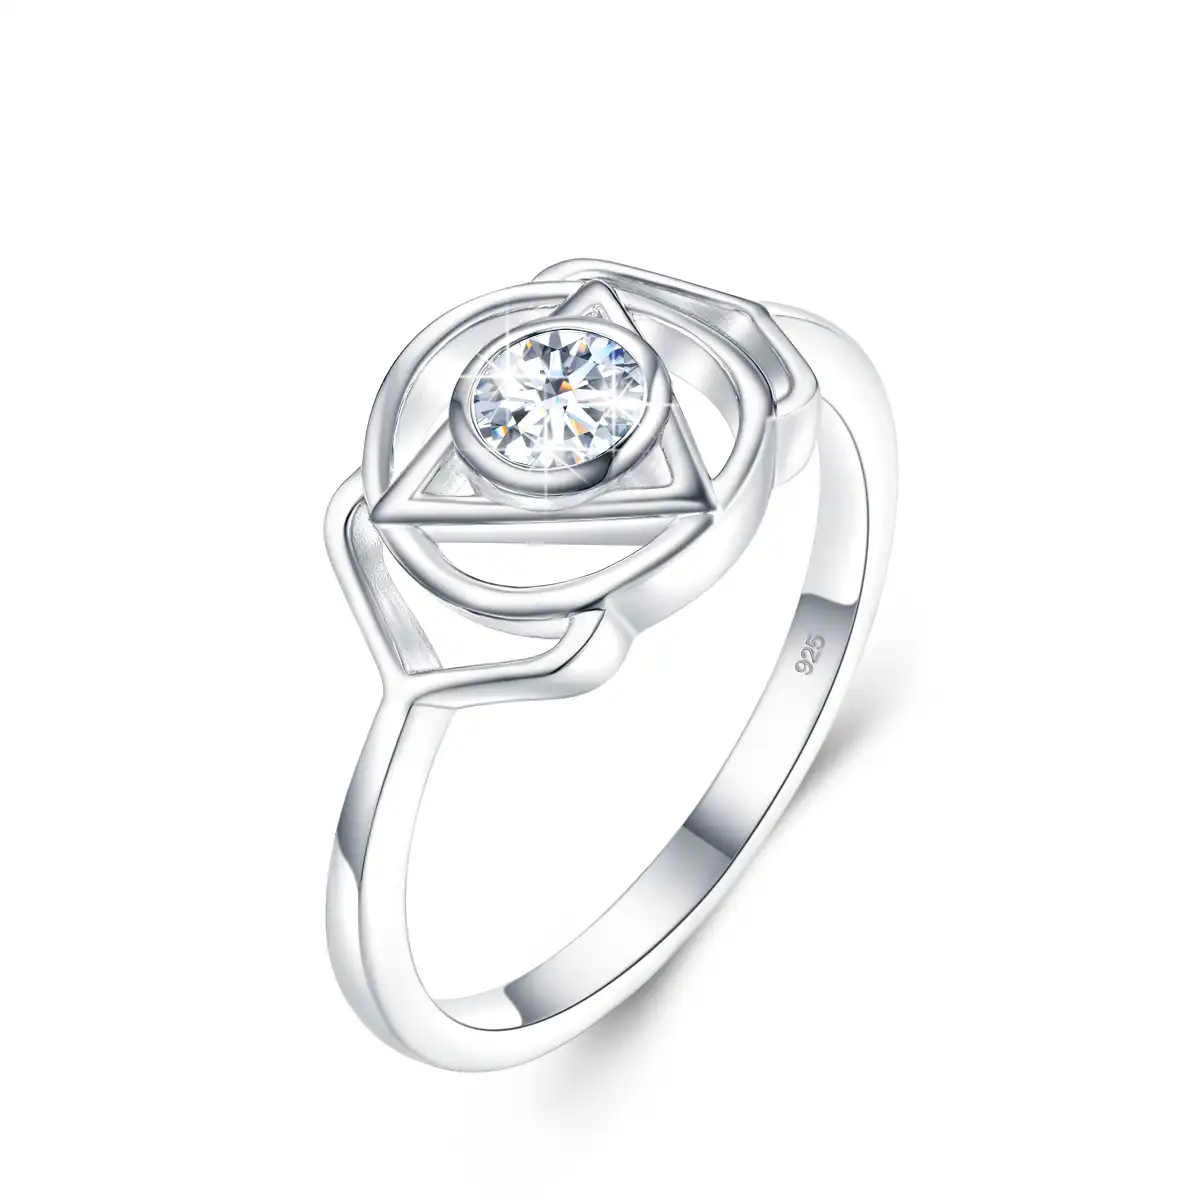 Exquisite yoga jewelry eye of freemasonry designer style anel prata 925 wedding engagement 0.3 carat moissanite jewelry ring